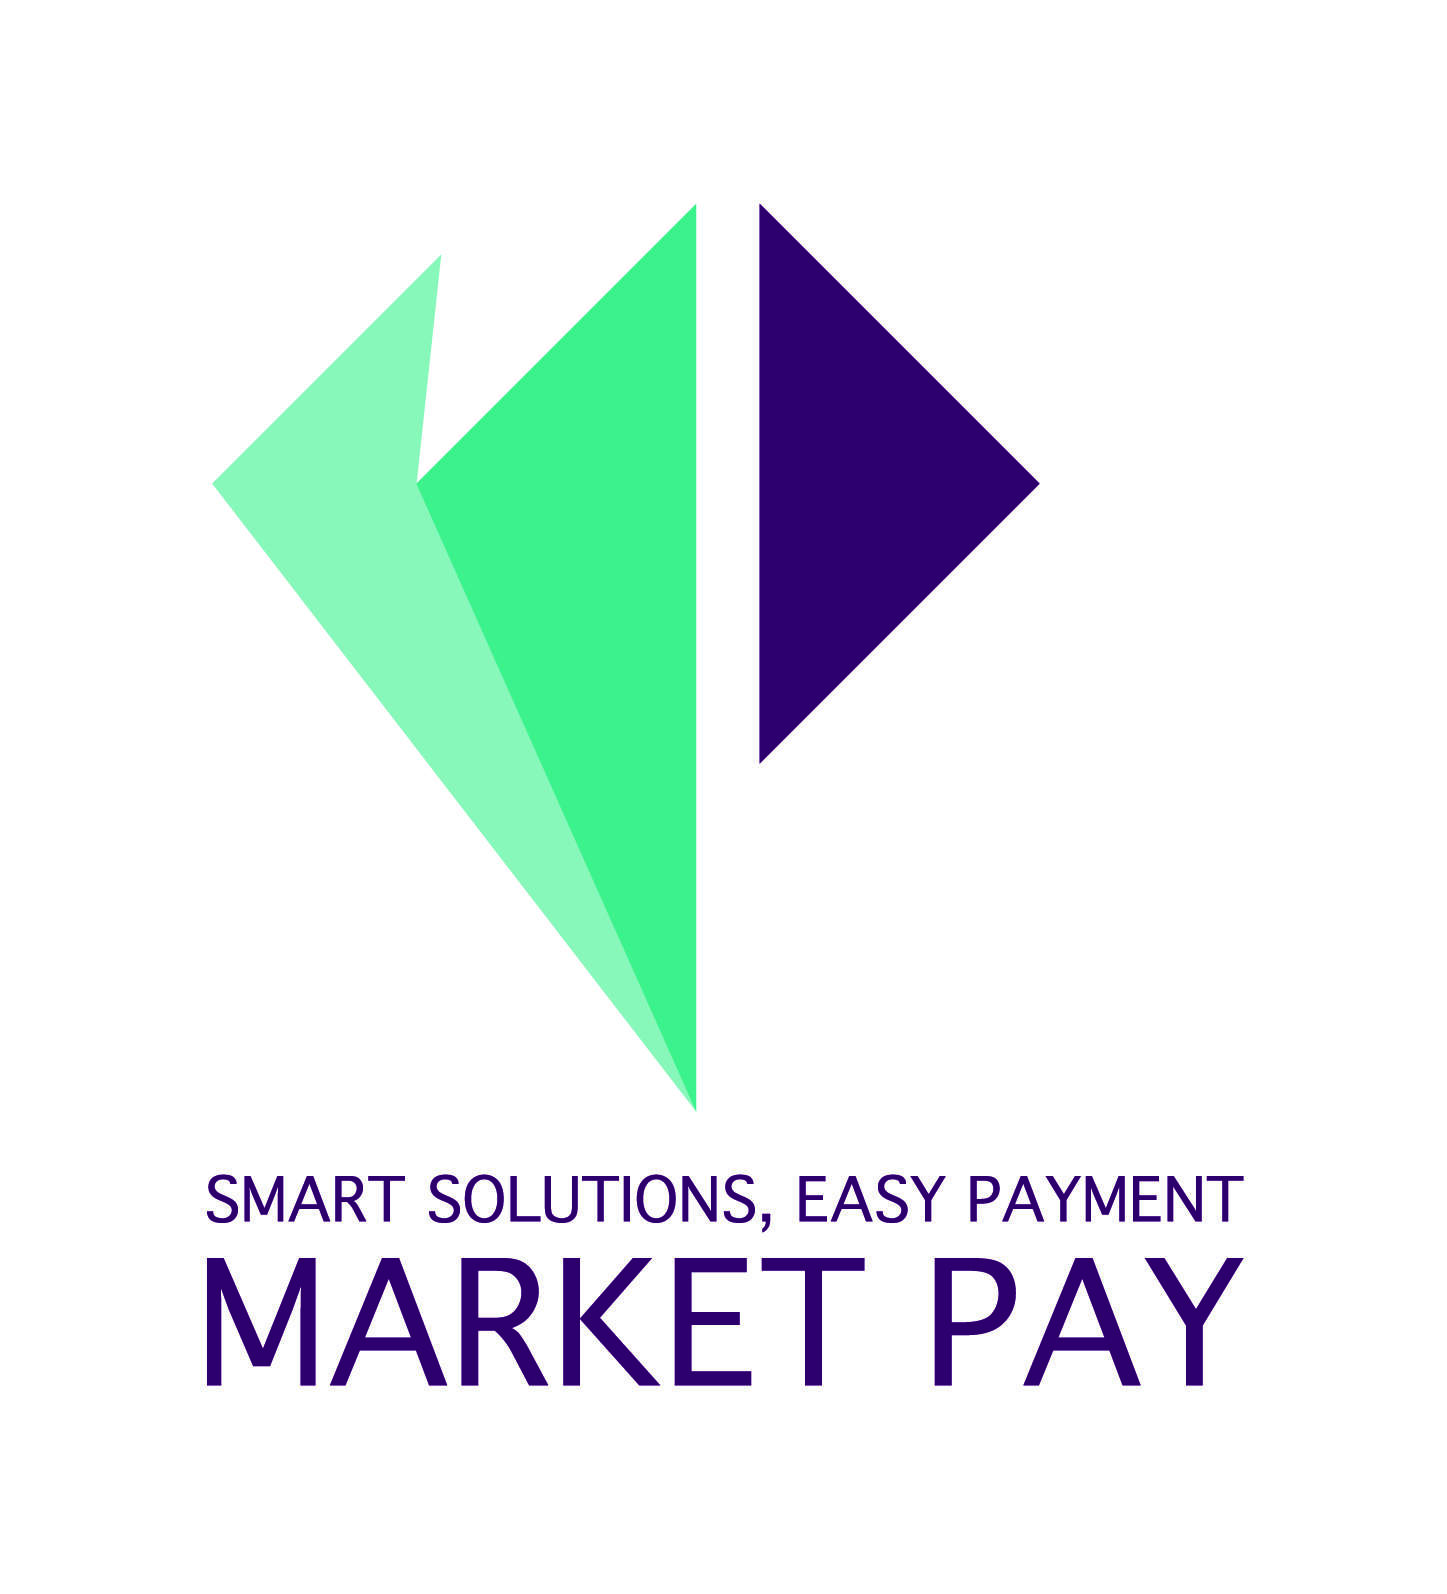 Pay Pay Logo - Market Pay logo (2) - Electronic Payments International